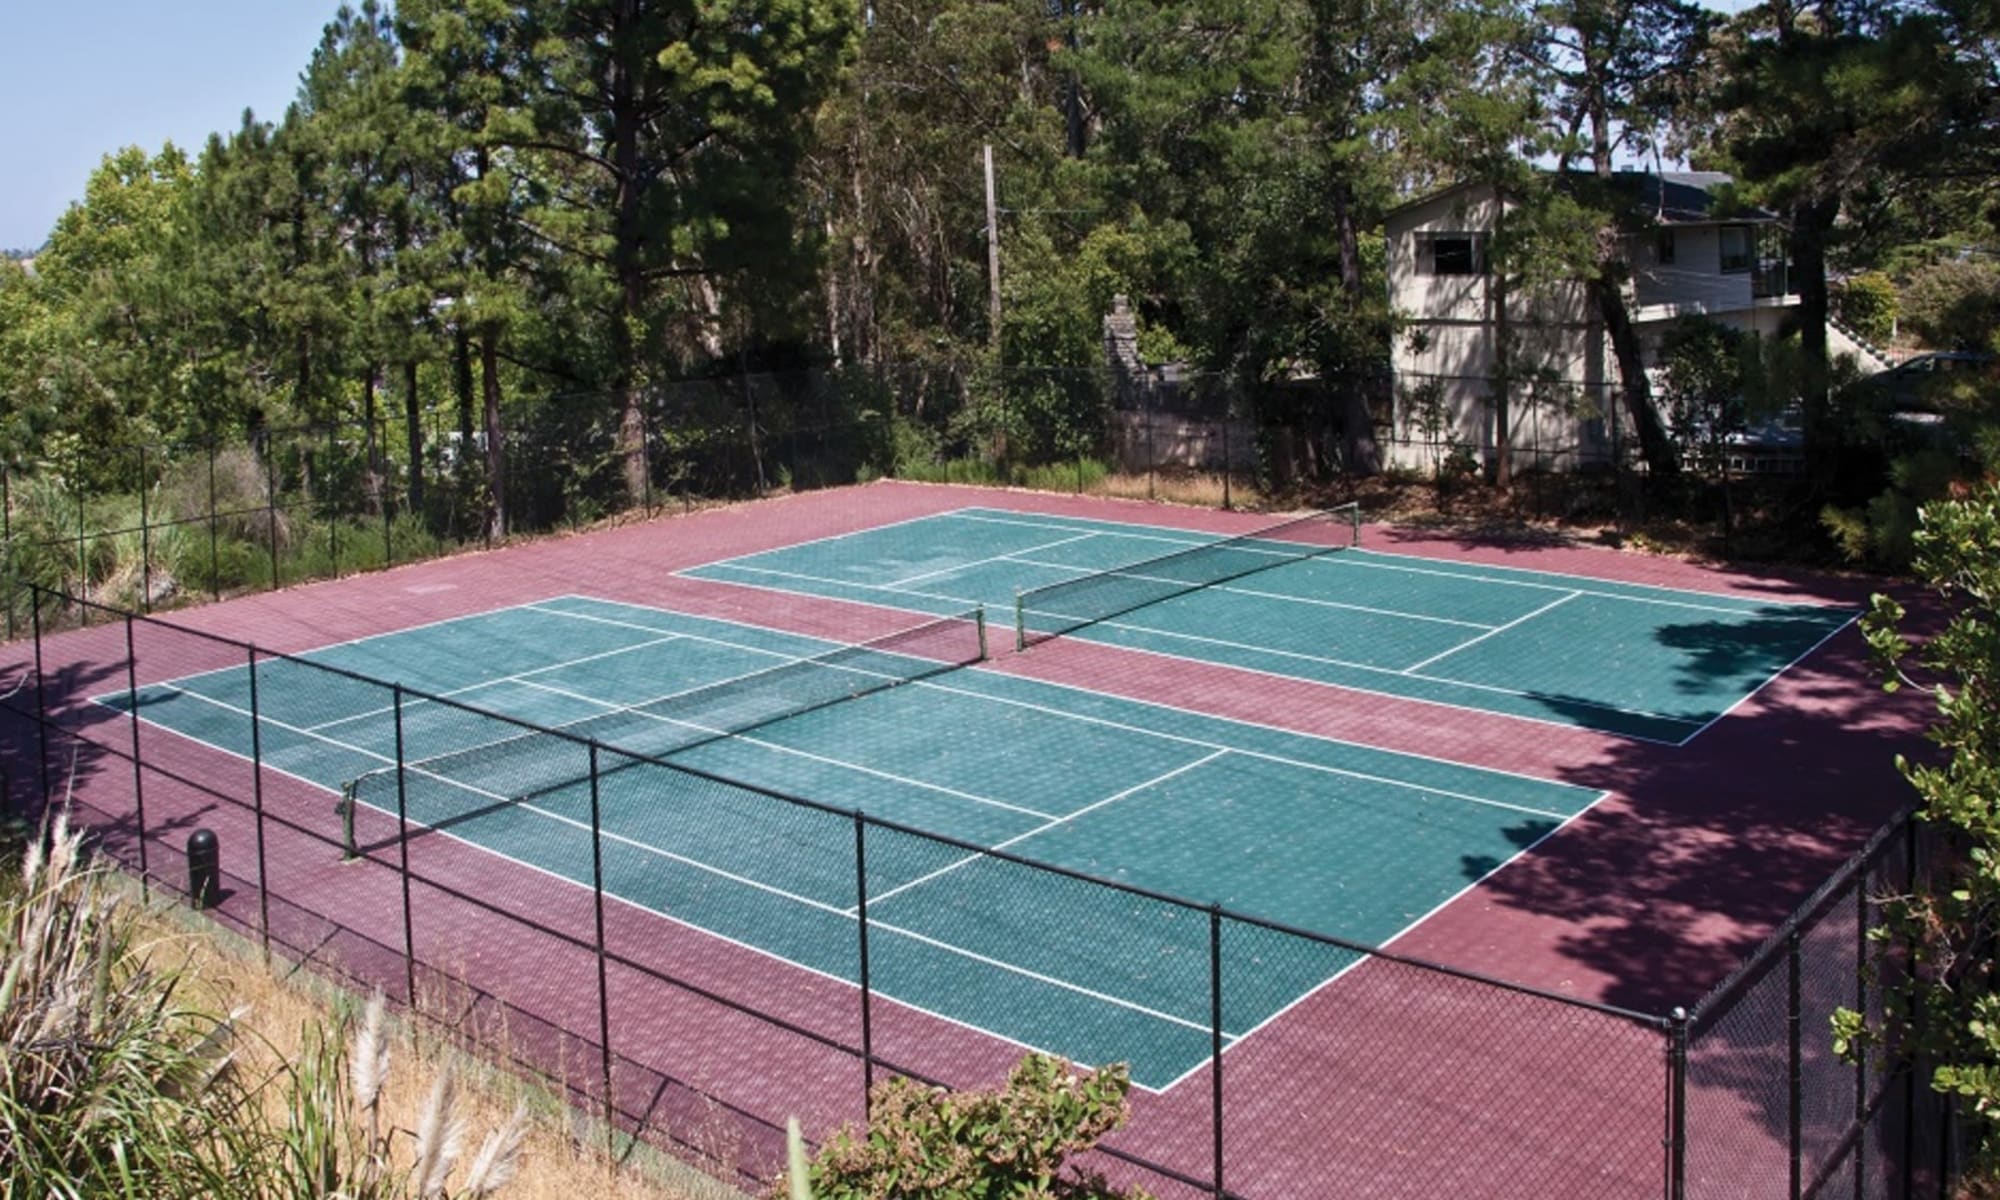 Tennis courts at Madera Valley in Corte Madera, California